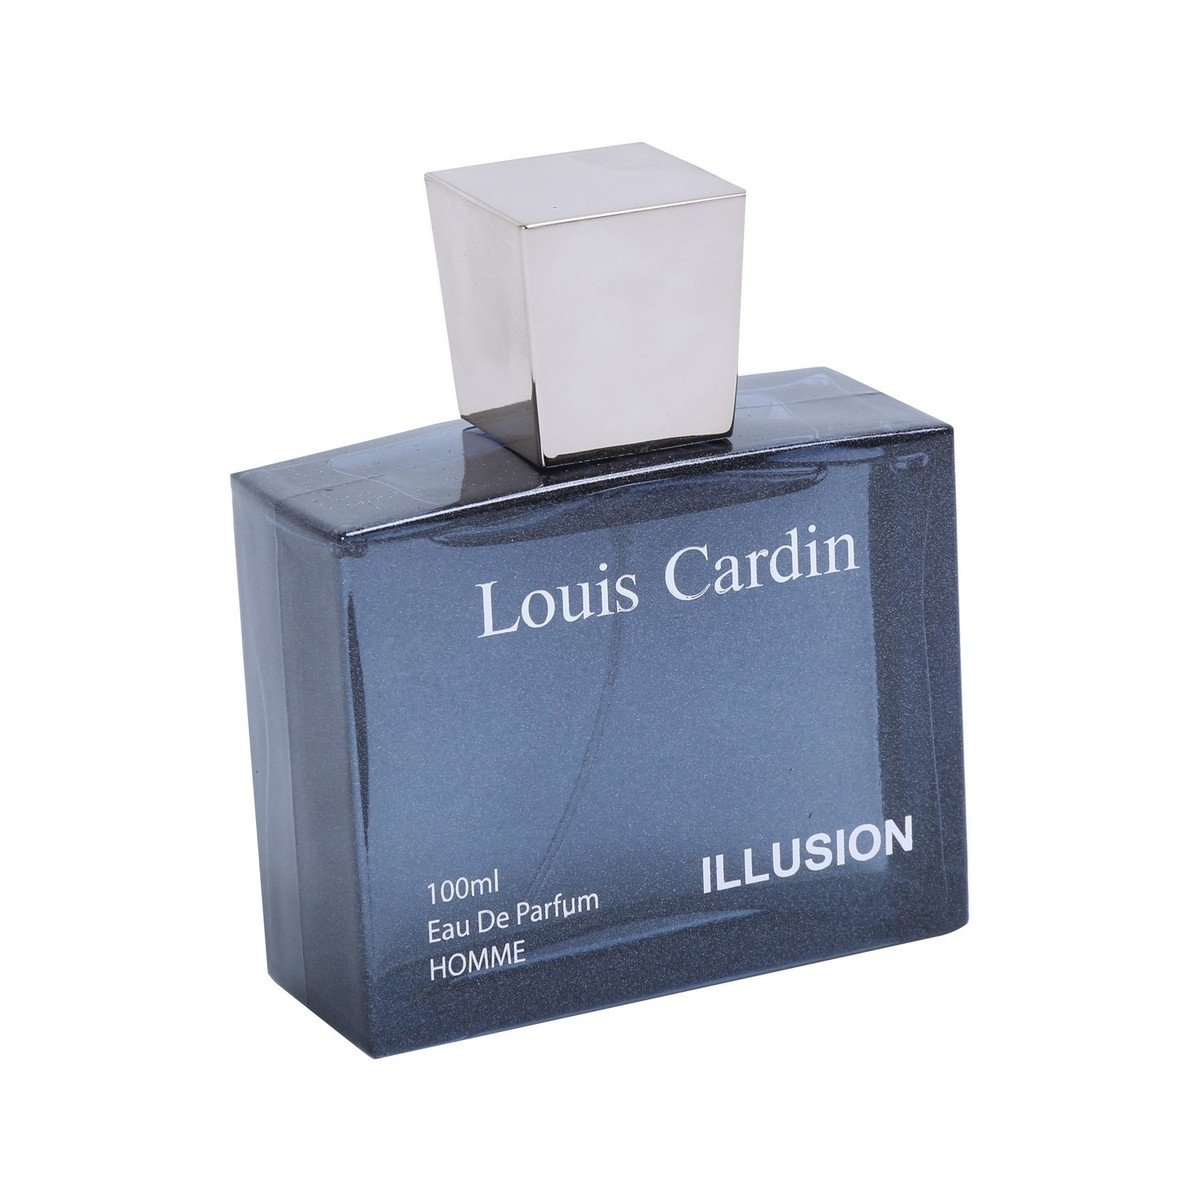 LOUIS CARDIN ILLUSION EDP PERFUME FOR MEN